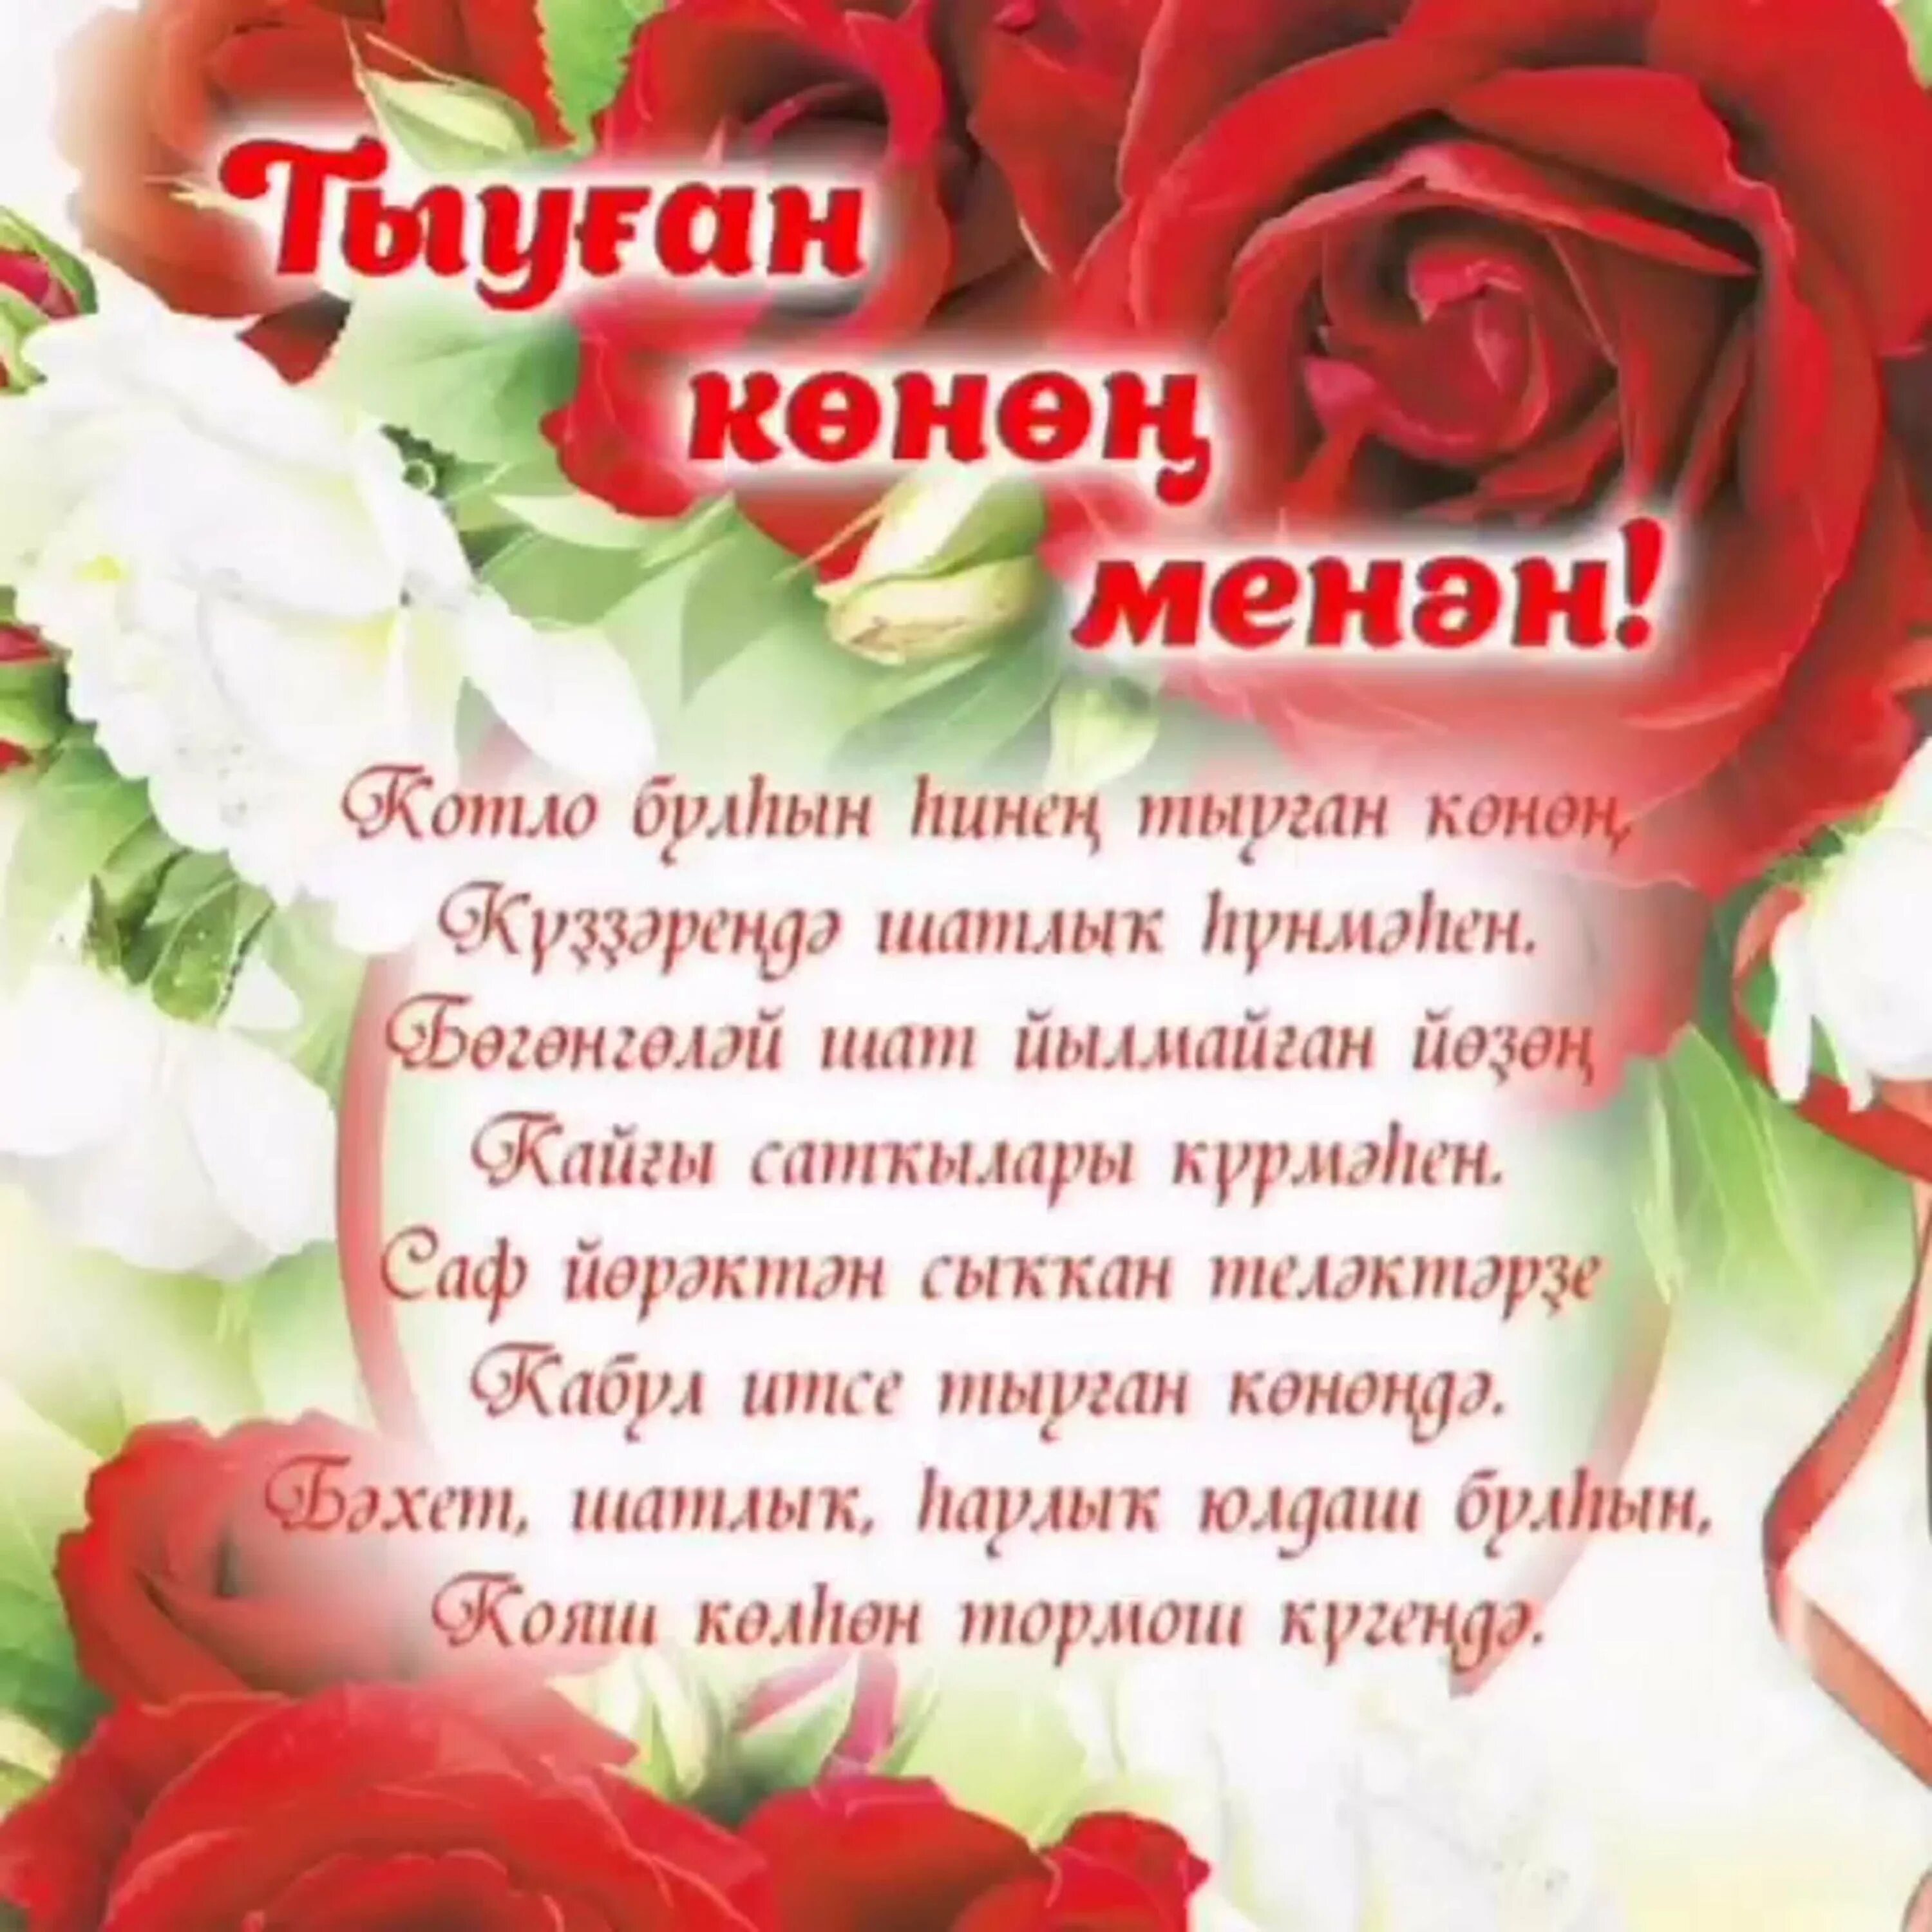 Туган конен текст. Поздравления на башкирском языке. Поздравления с днём рождения на башкирском языке. Поздравление на татарском языке. Поздравления с днём рождения женщине на башкирском языке.